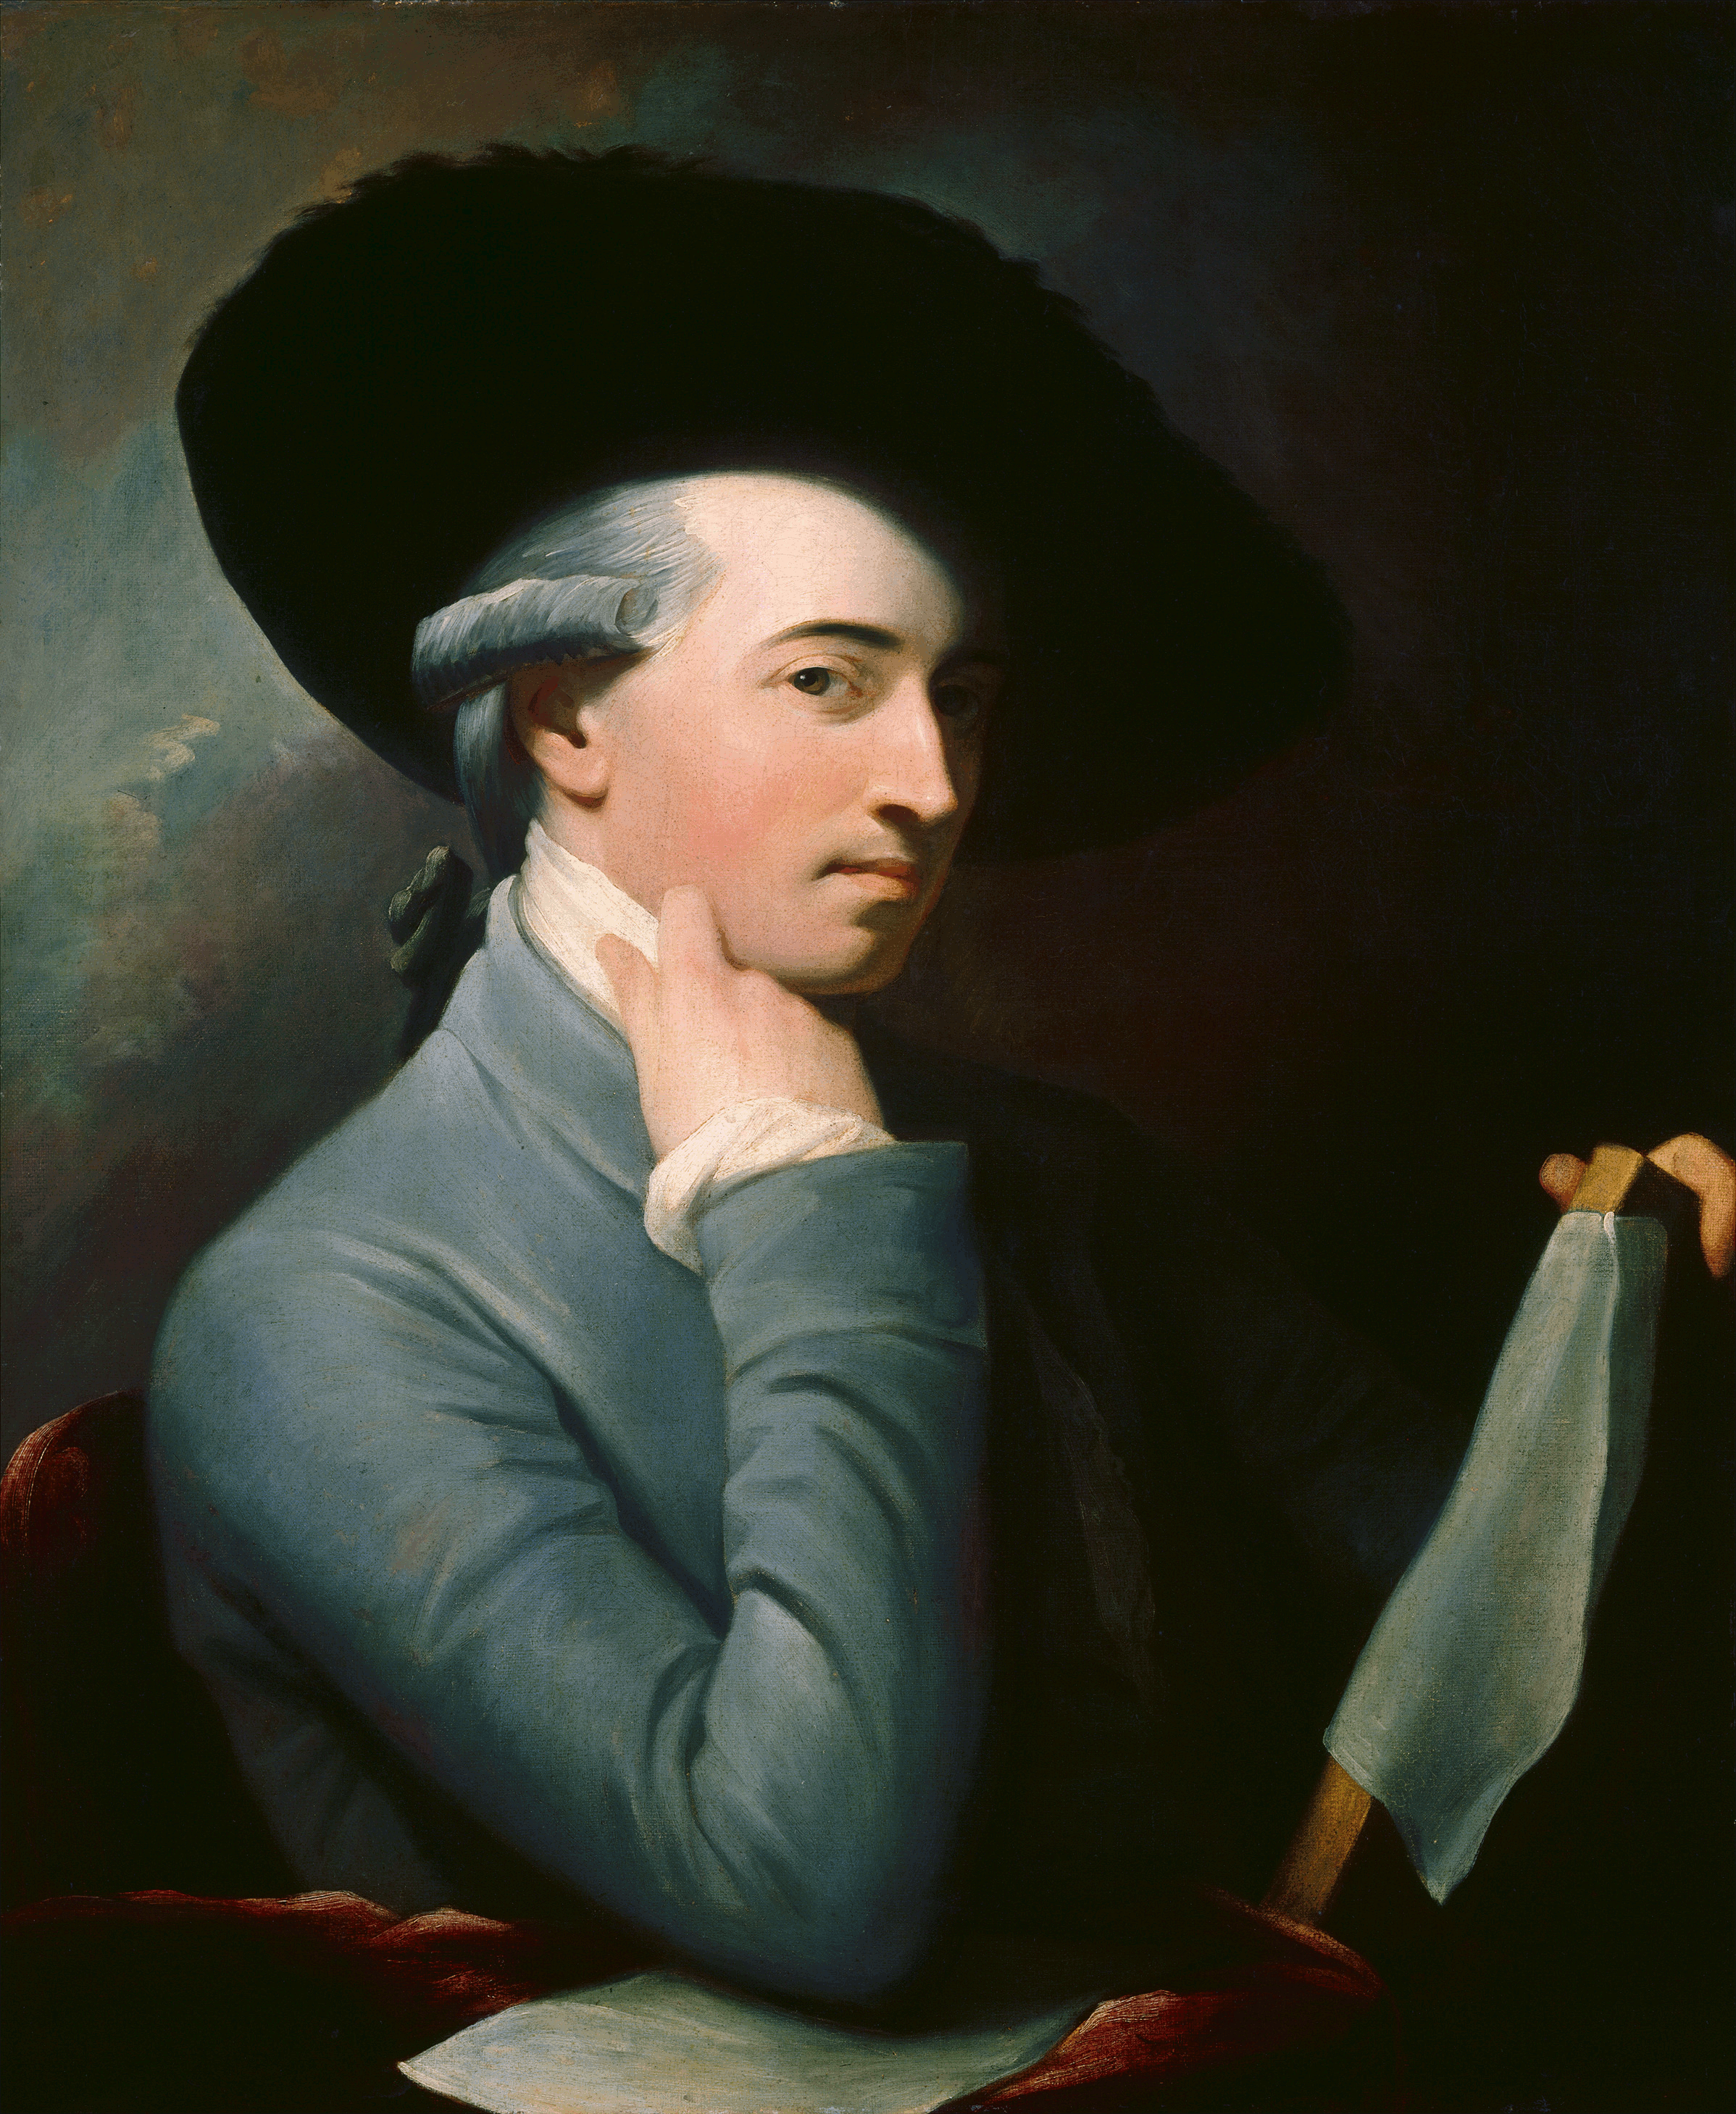 Benjamin West - October 10, 1738 - March 11, 1820